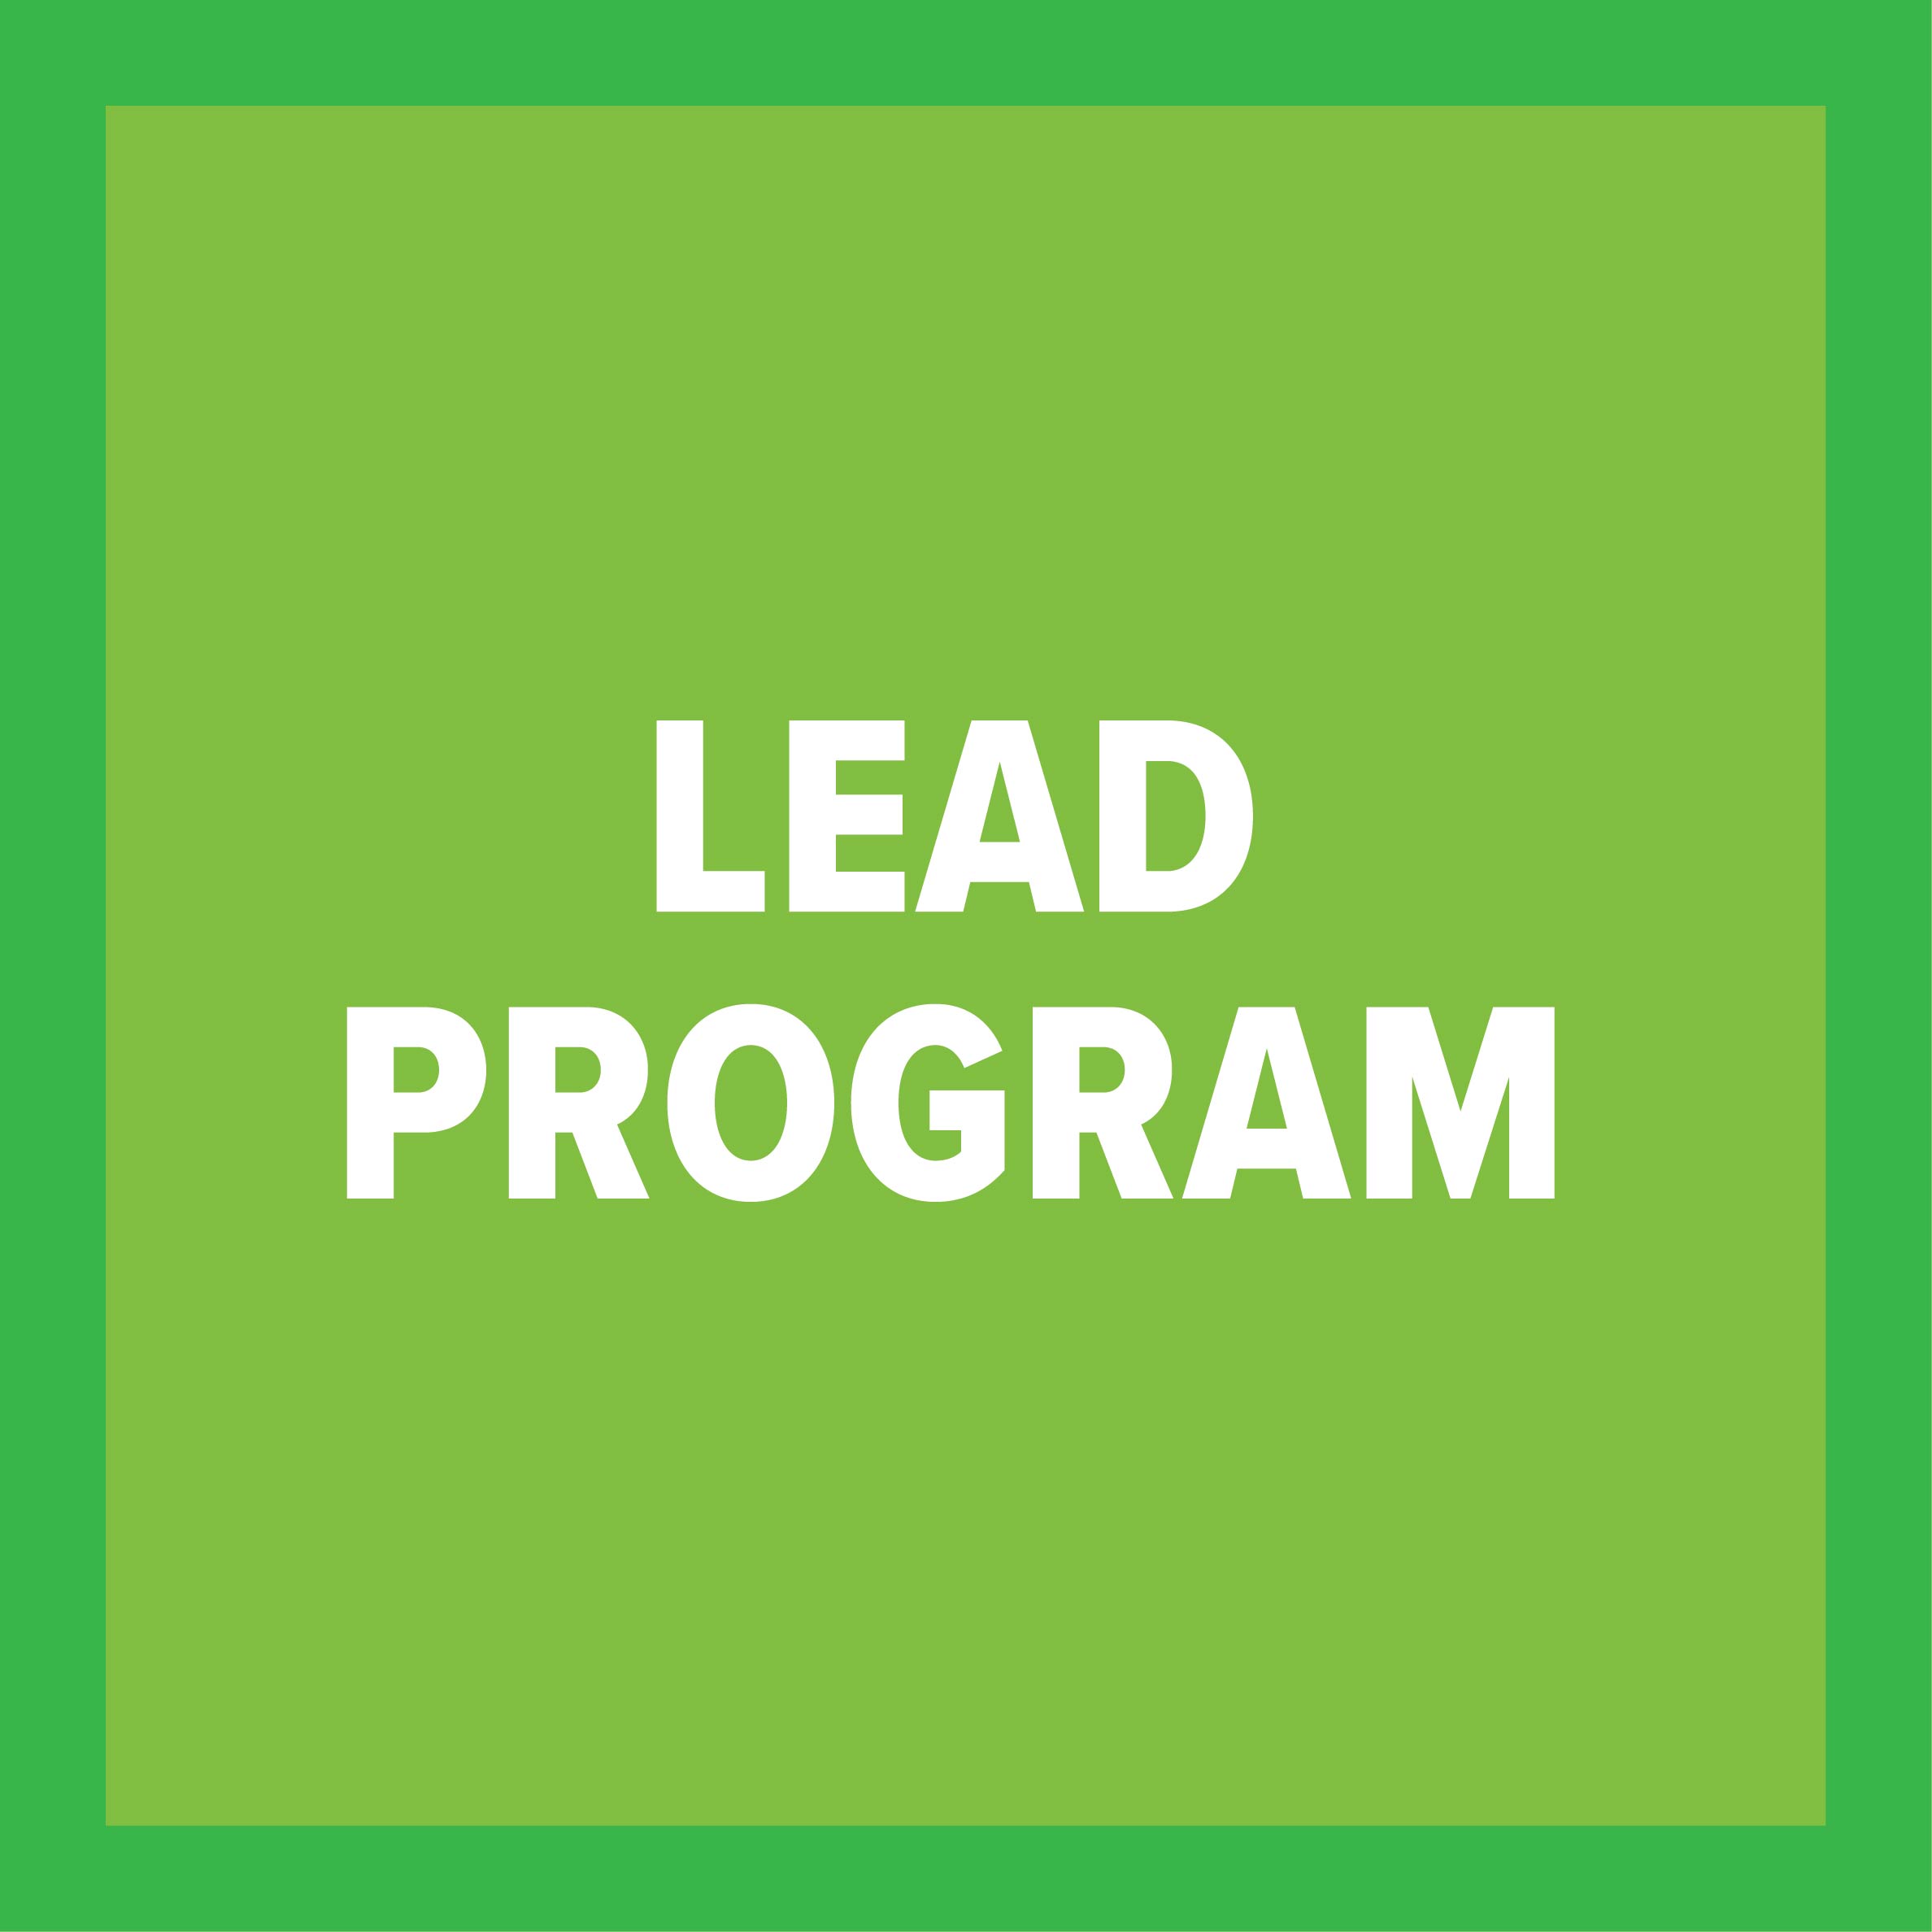 LeadProgram-03